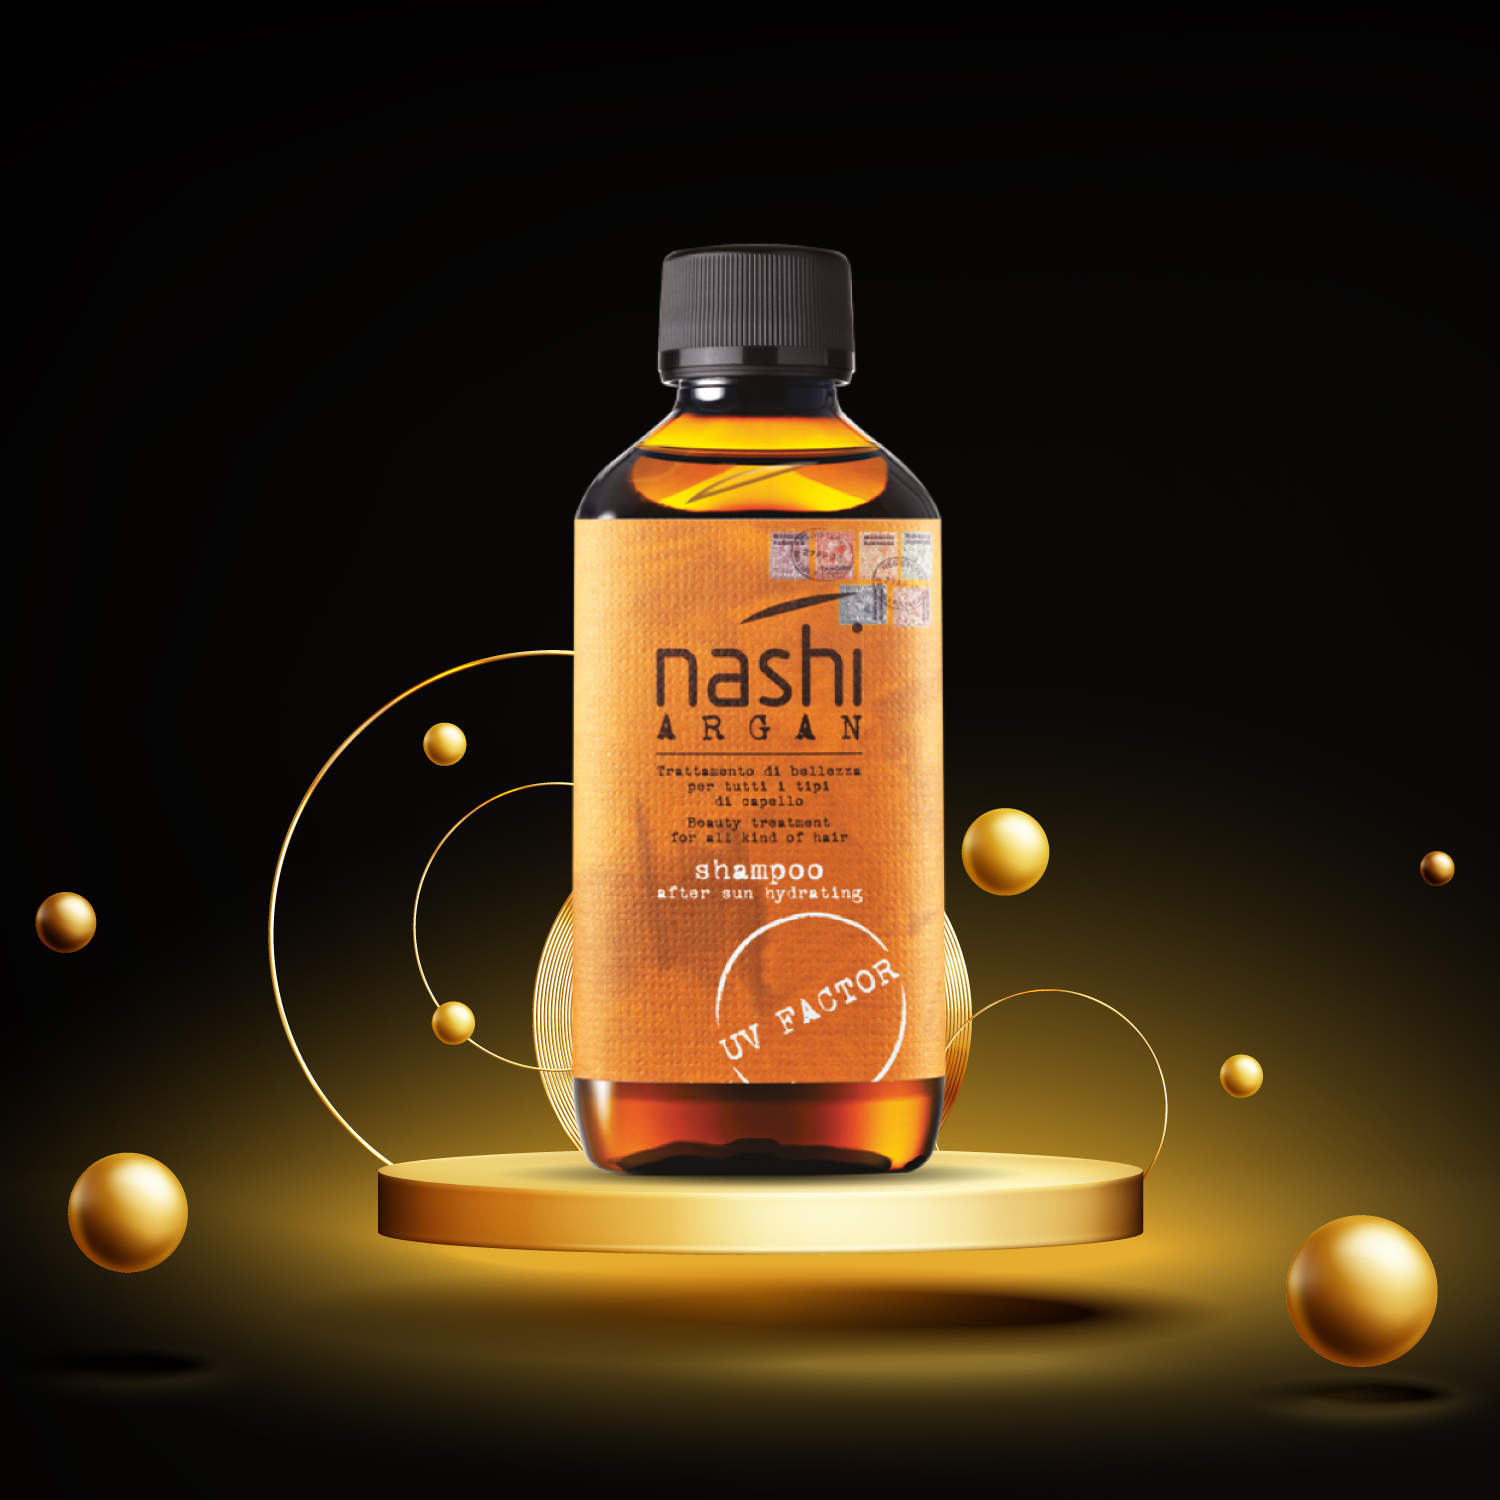 Nashi Argan oil, shampoo etc. - Get the best deals here